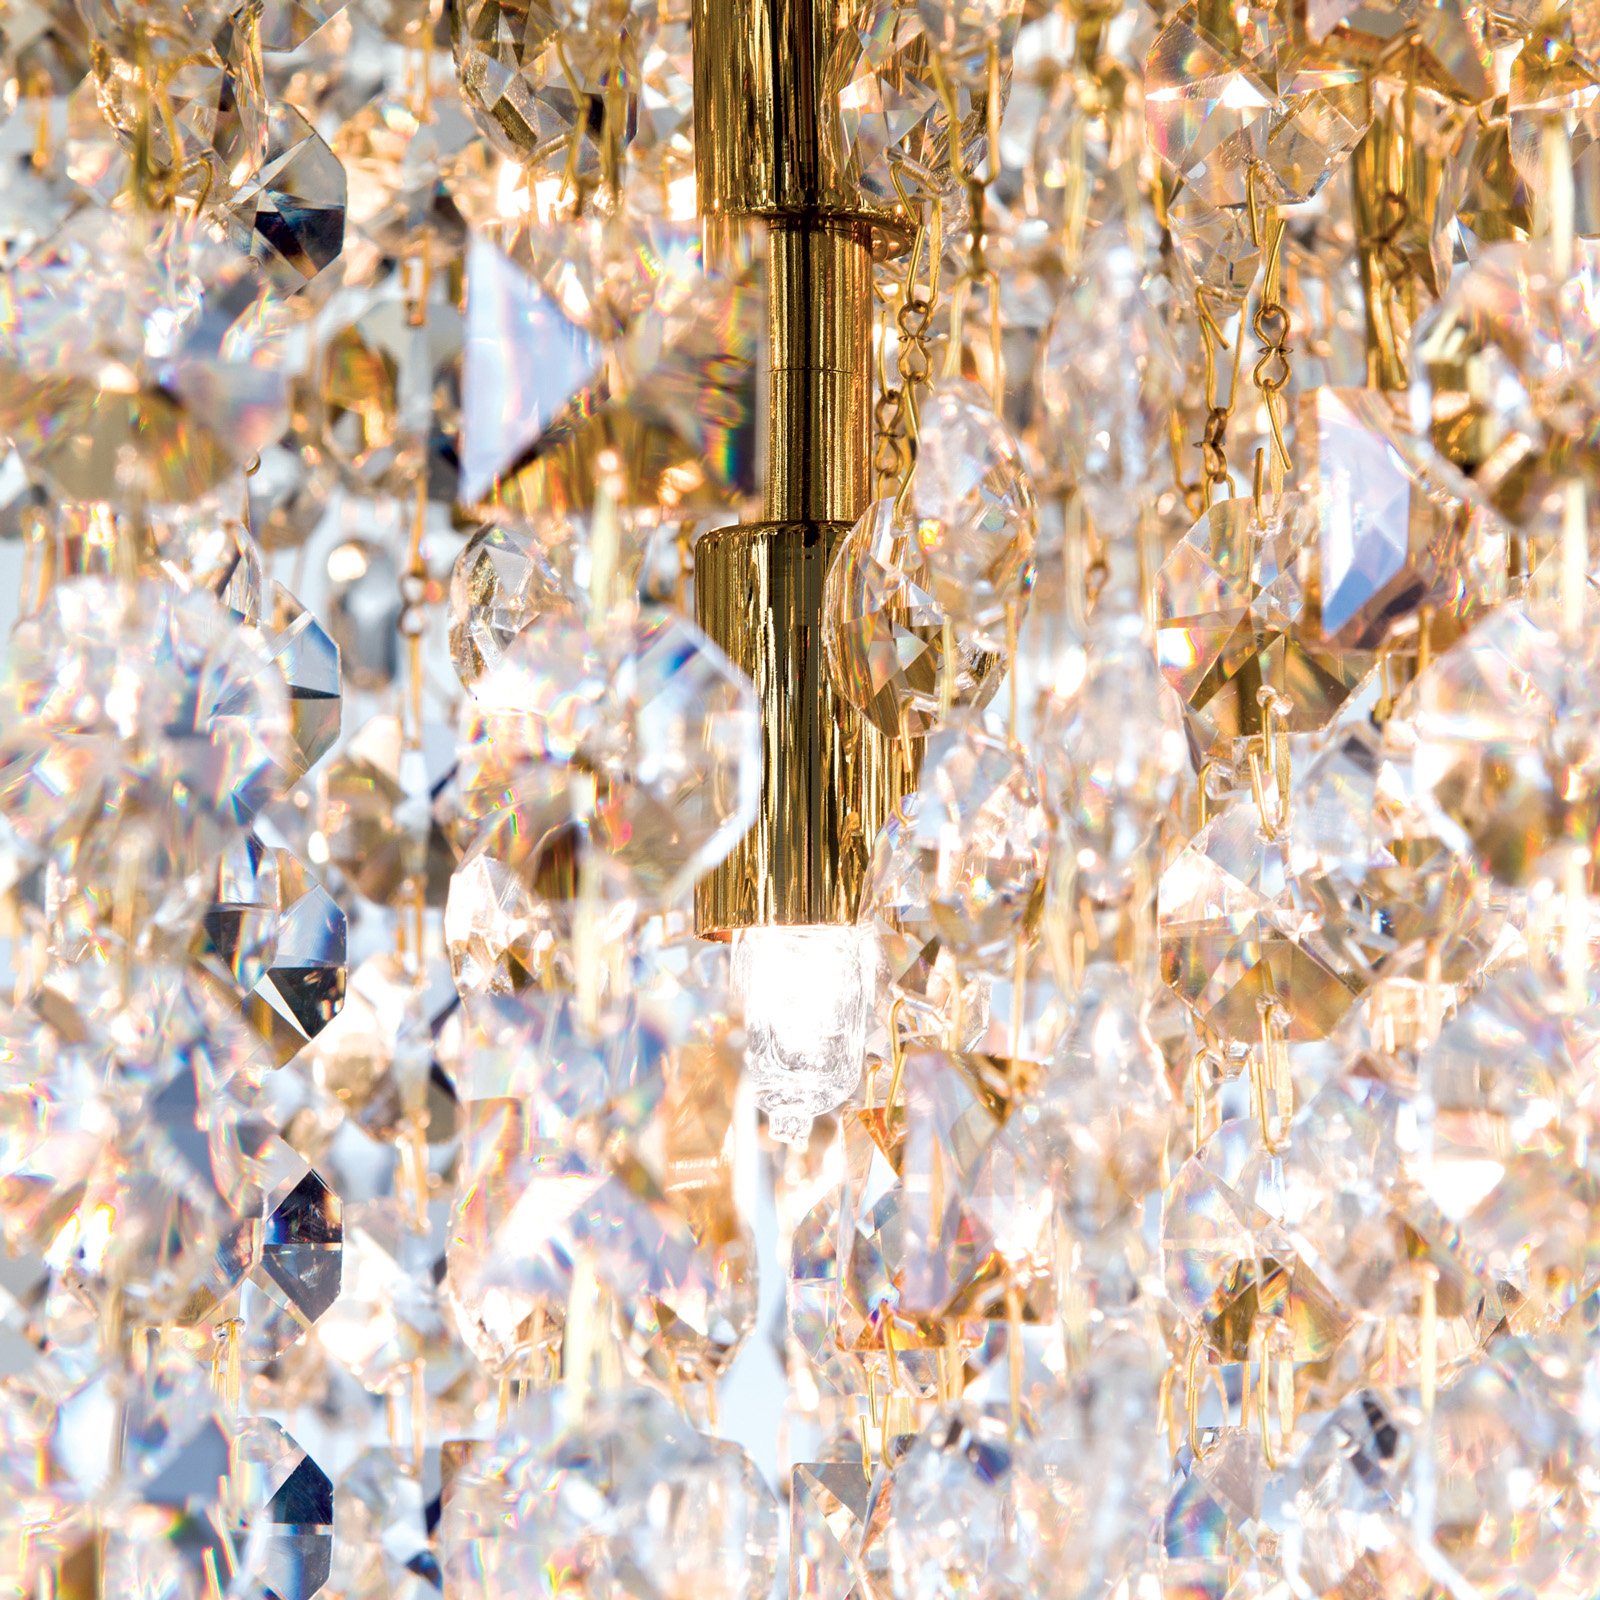 Plafondlamp Crystalriver met kristalbezetting goud